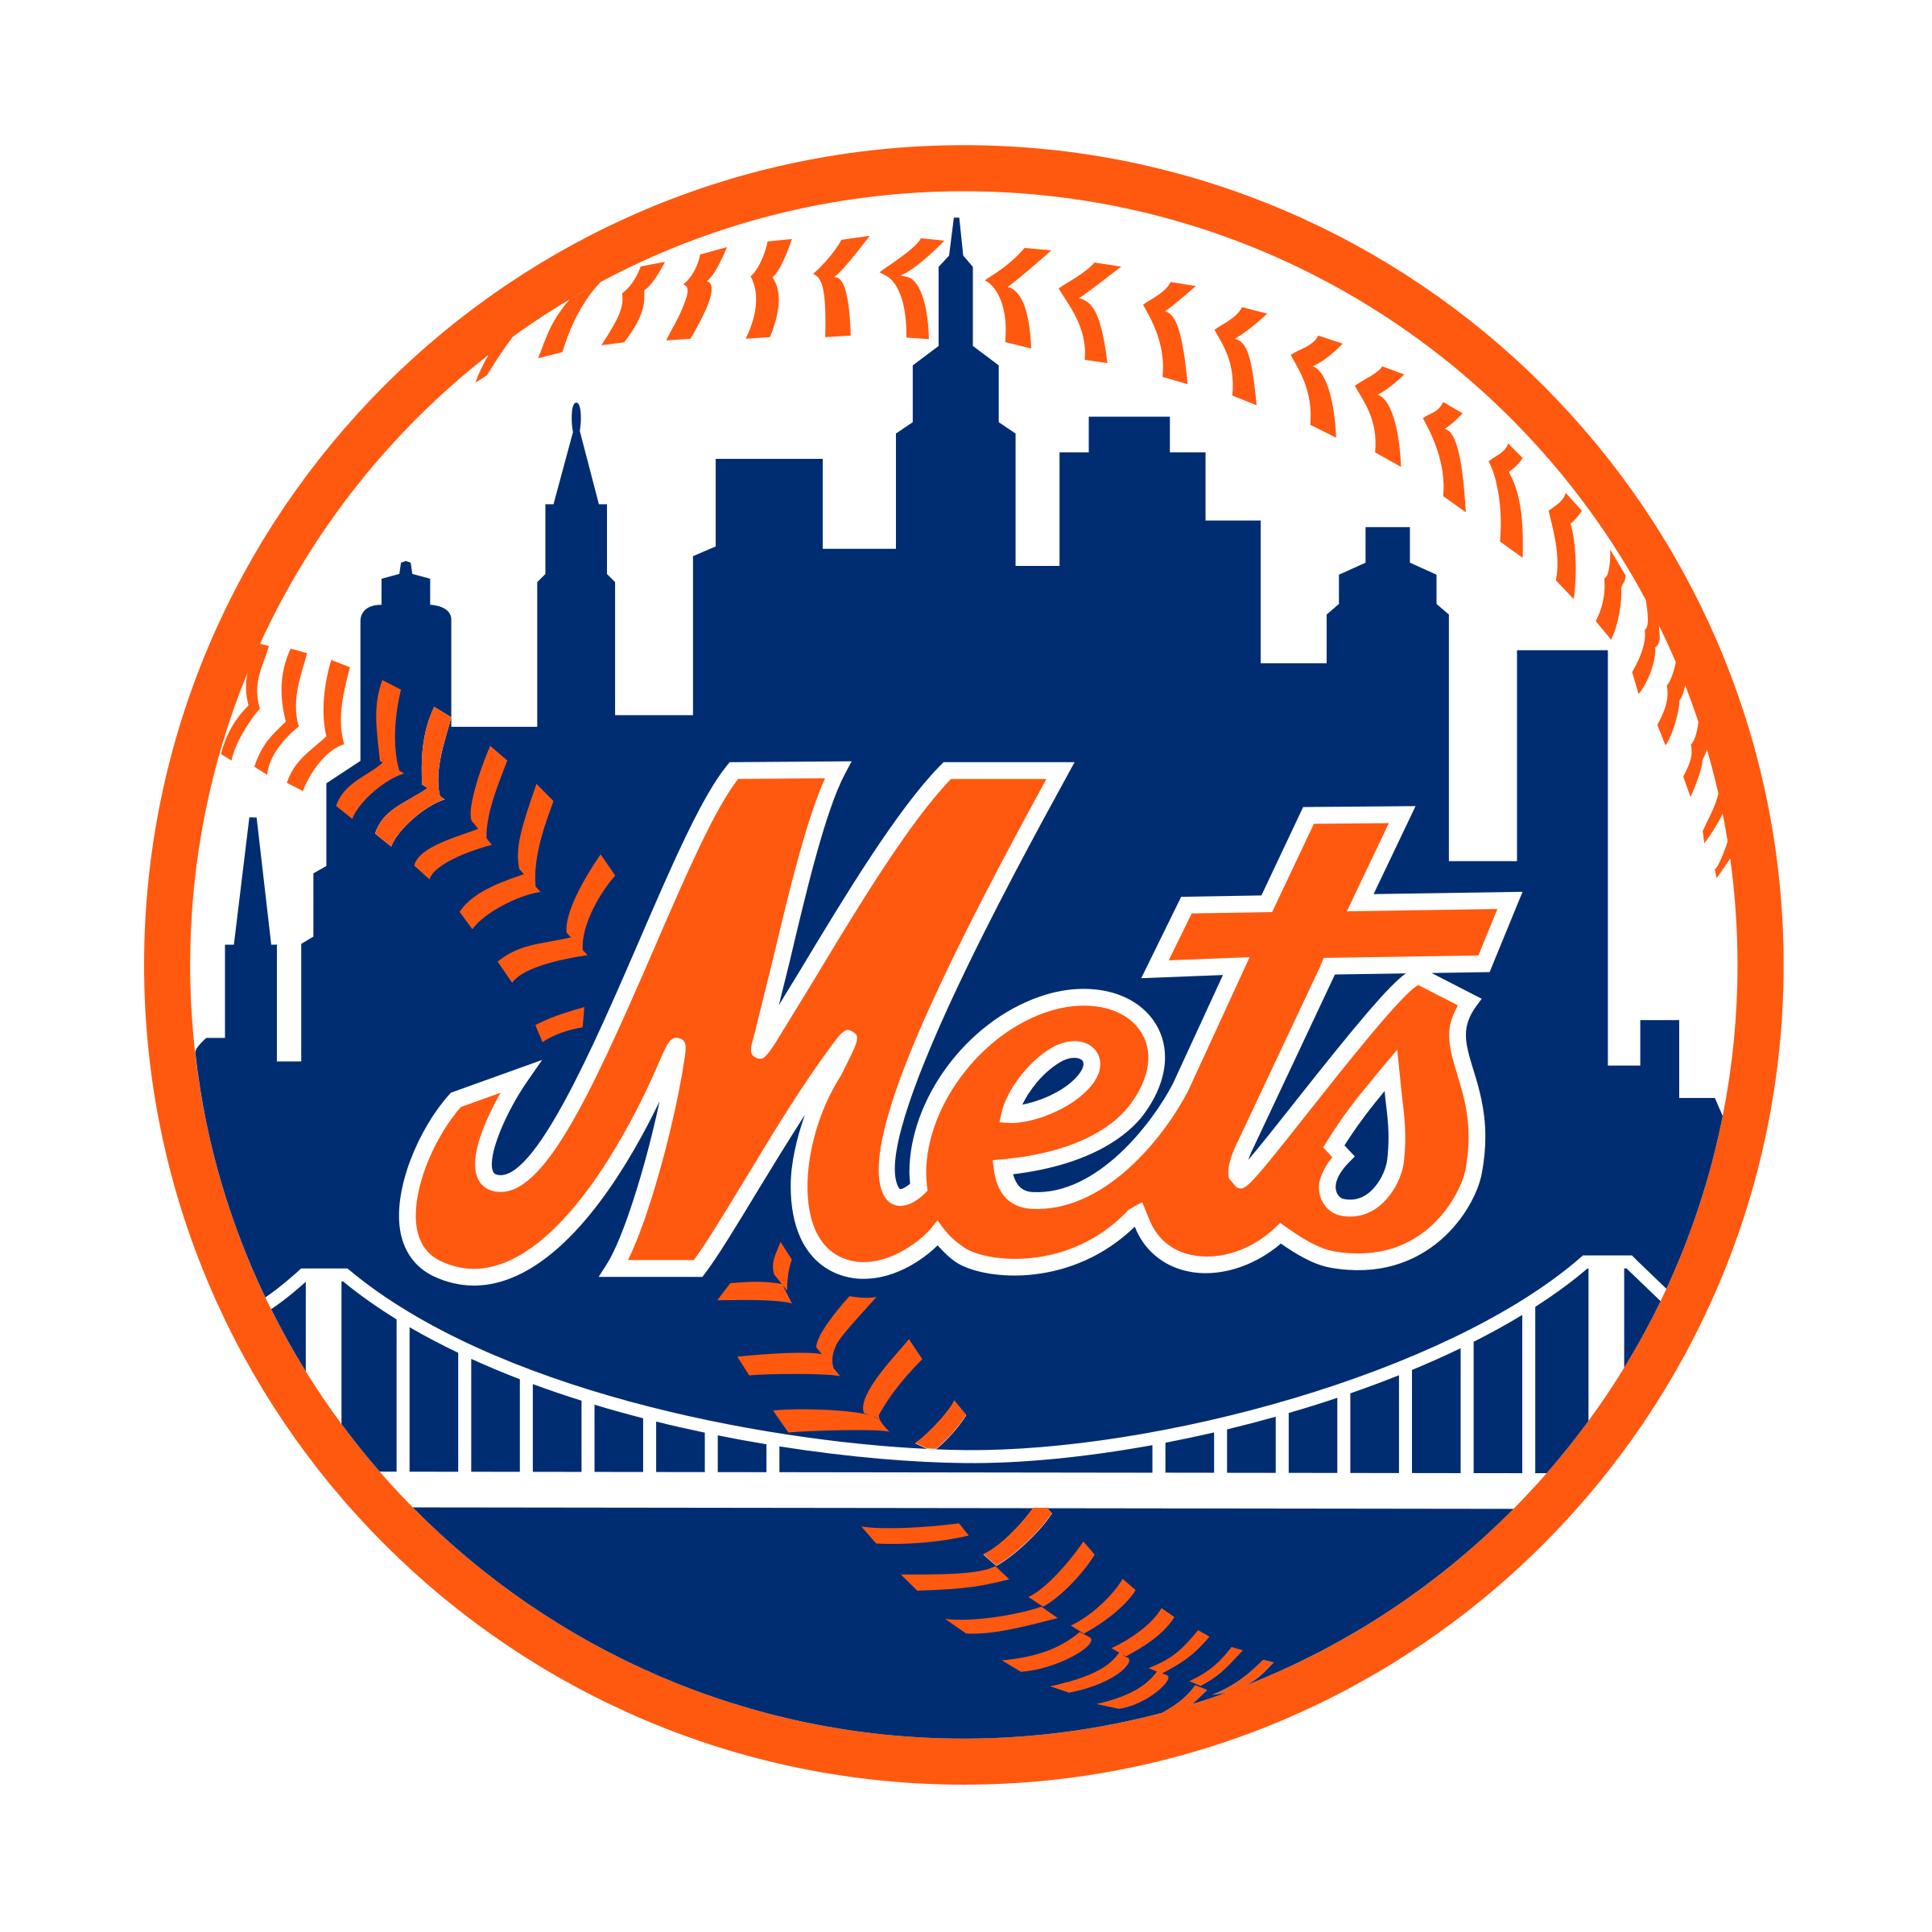 New York Mets Odds & Bets